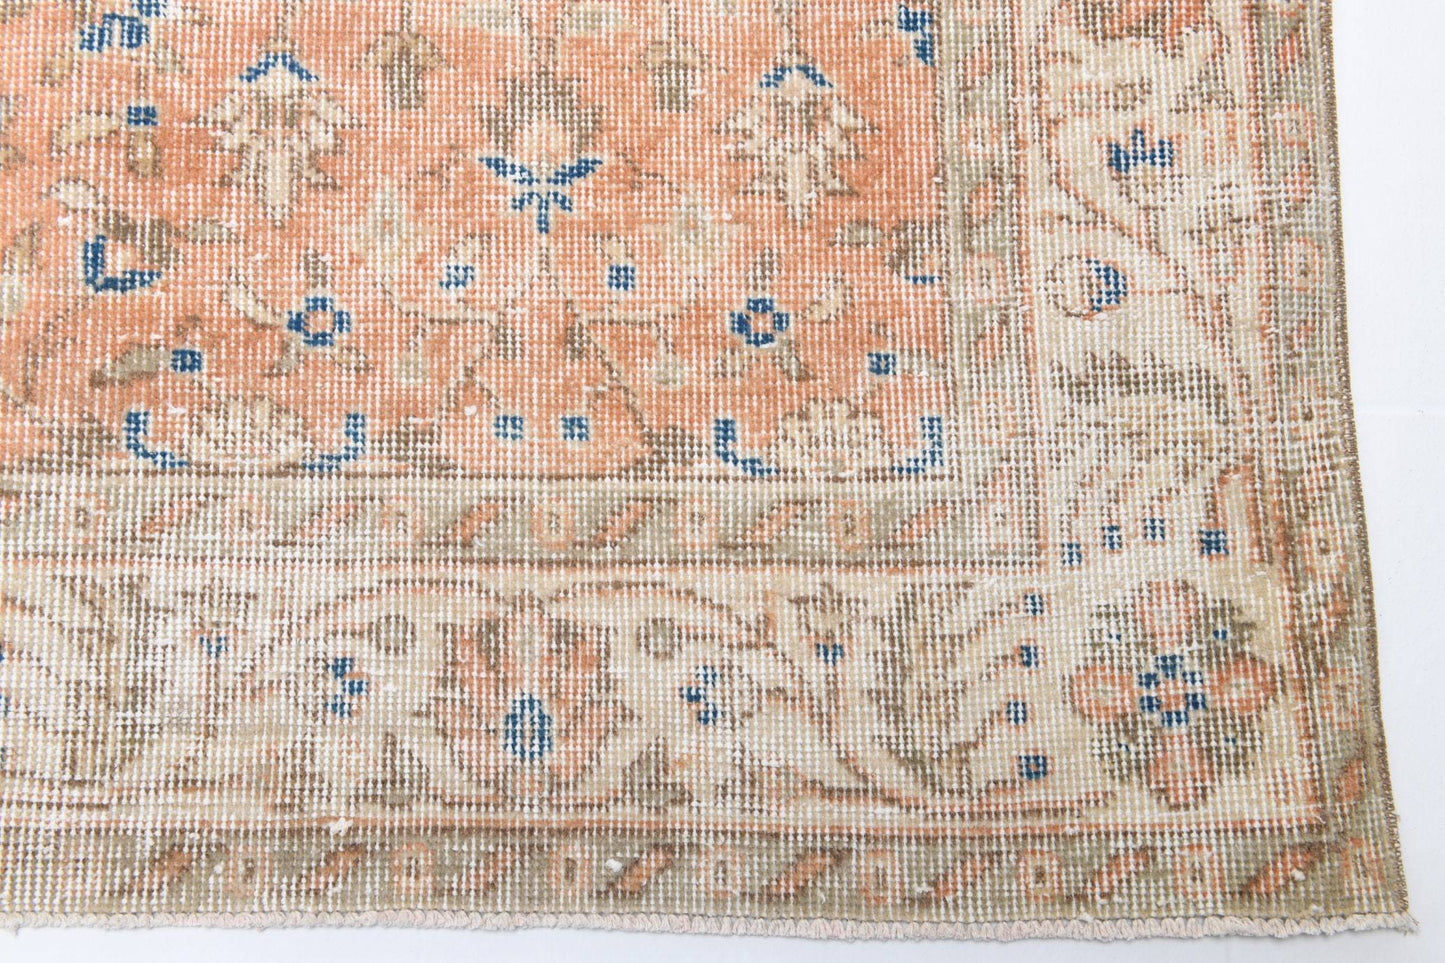 6' x 9' Tan-Ivory Turkish Vintage Rug  |  RugReform